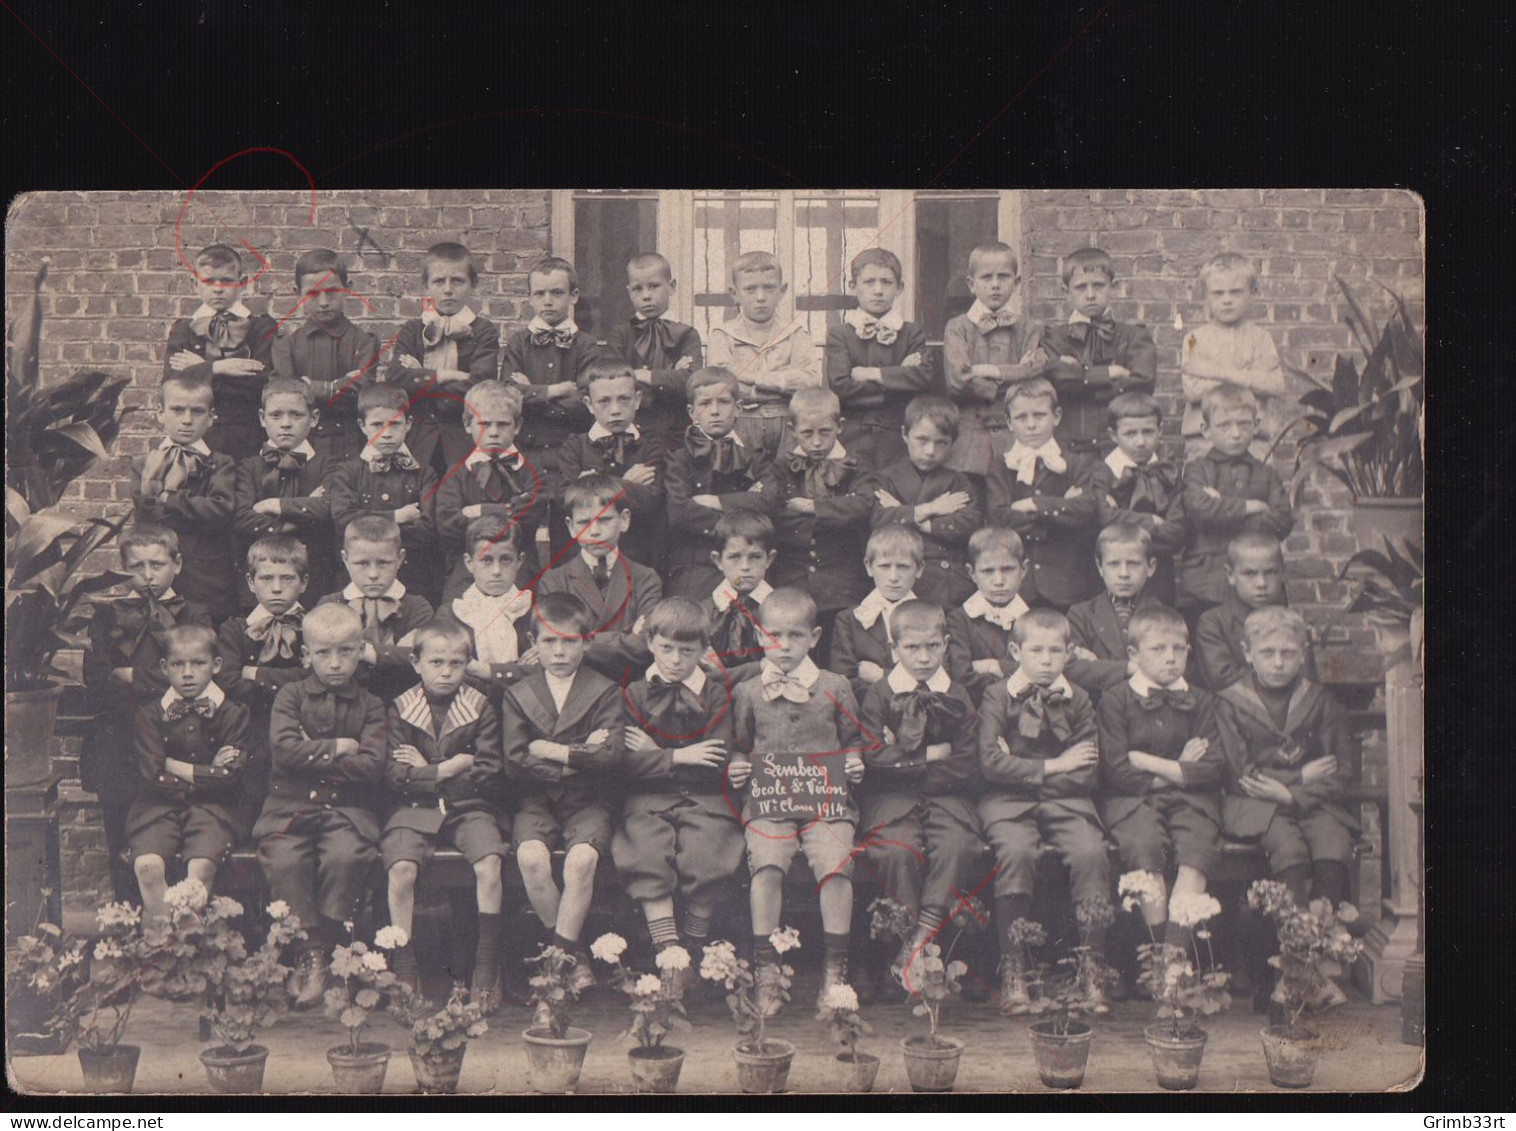 Lembecq - Ecole St. Viron IVe Classe 1914 - Fotokaart - Halle